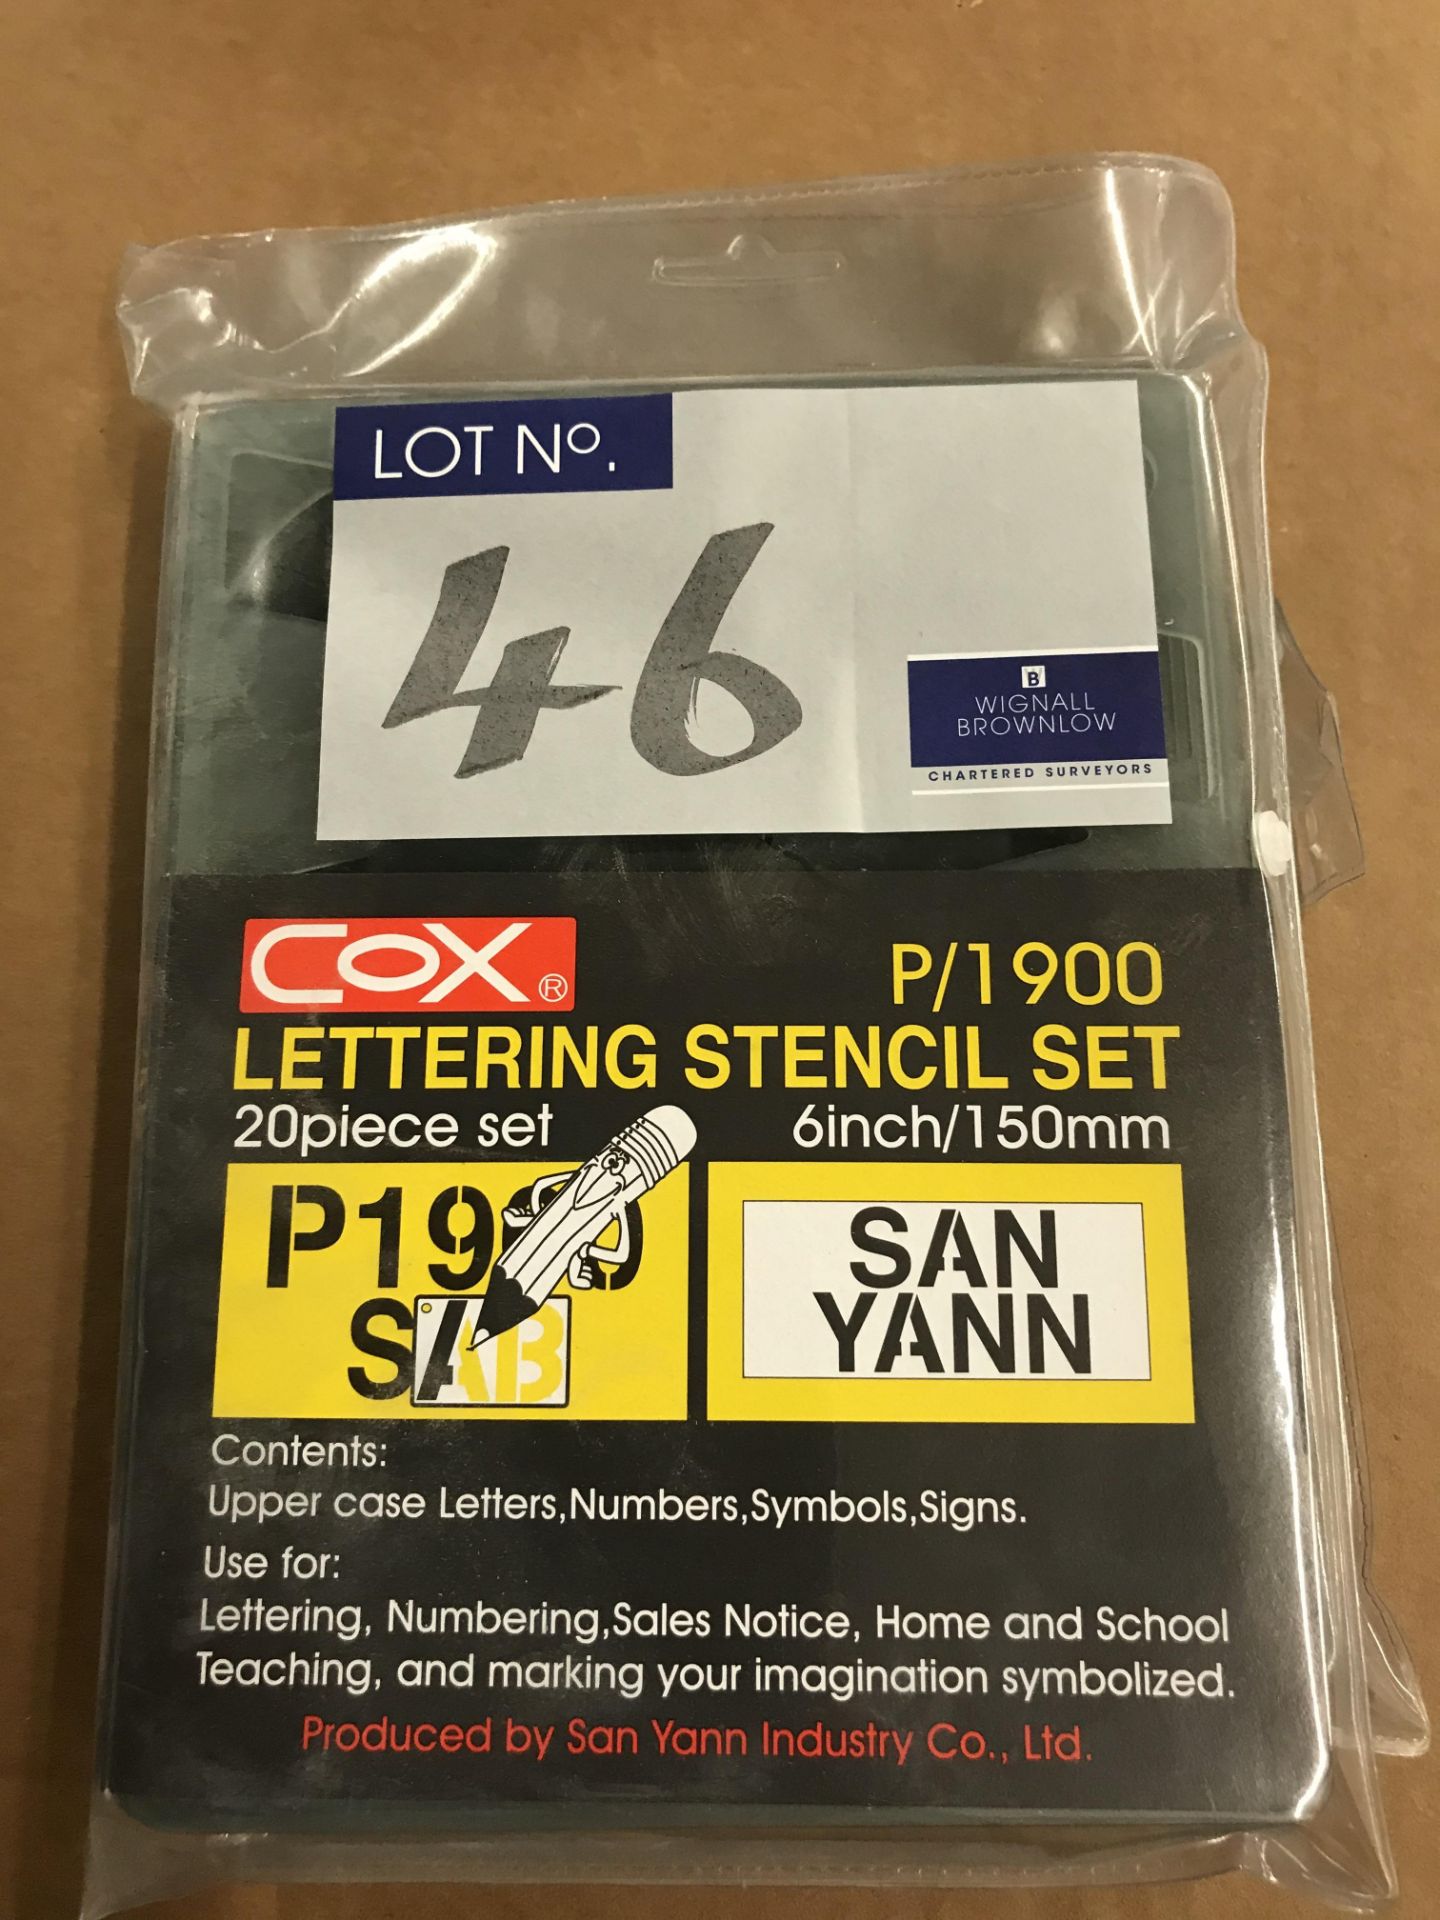 A Cox P/1900 6in/150mm 20 piece Lettering Stencil Set.